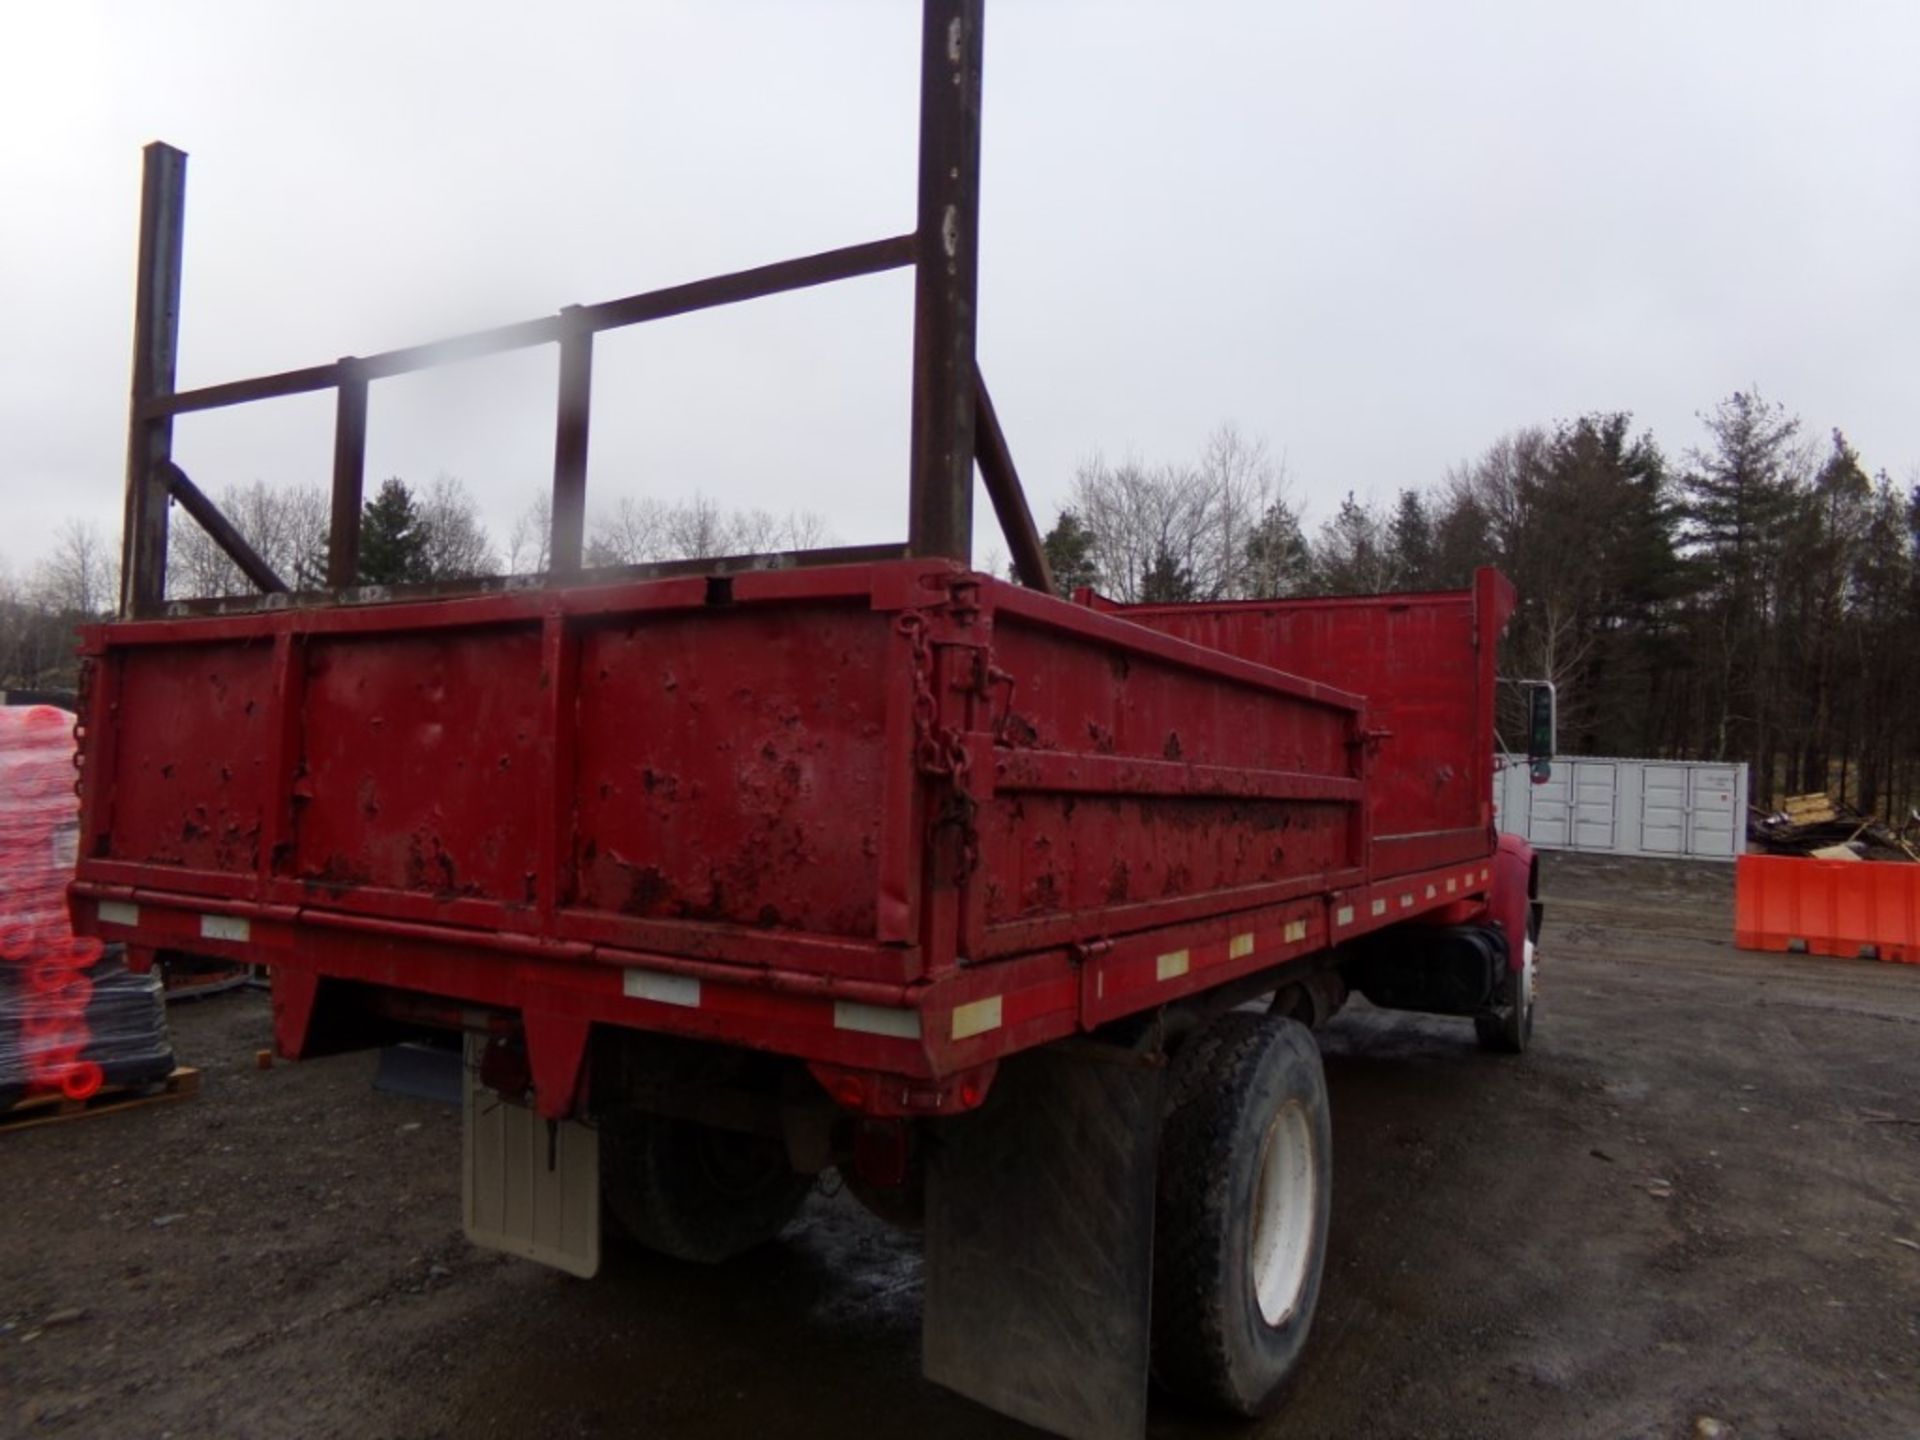 1996 International 4700, S/A Dump Truck, Red, Extra-Long Landscaper Dump Box w/Drop Down Sides, - Image 3 of 11